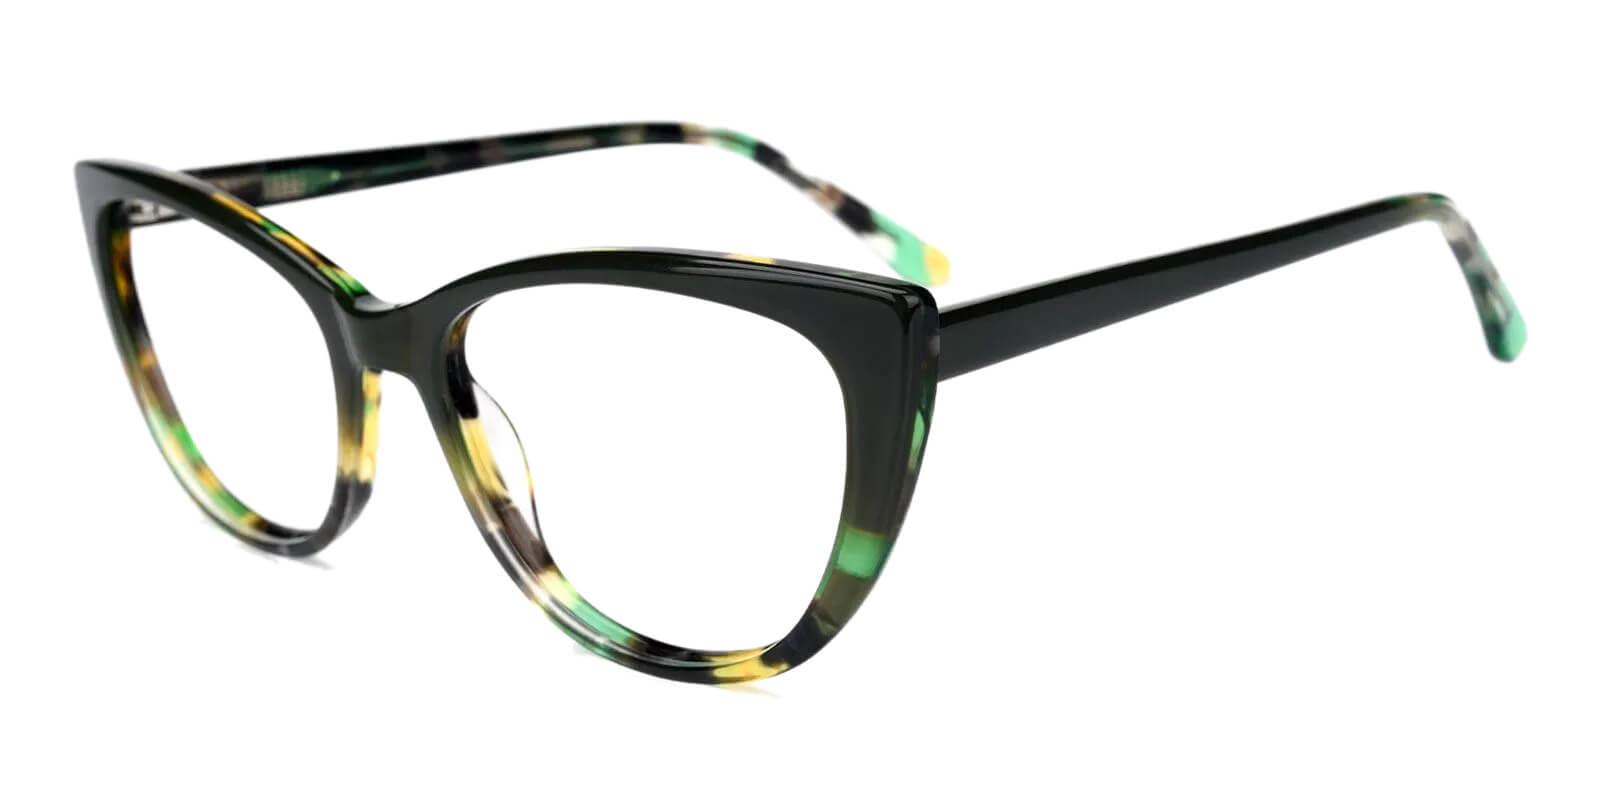 Freda Green Acetate Eyeglasses , Fashion , SpringHinges , UniversalBridgeFit Frames from ABBE Glasses